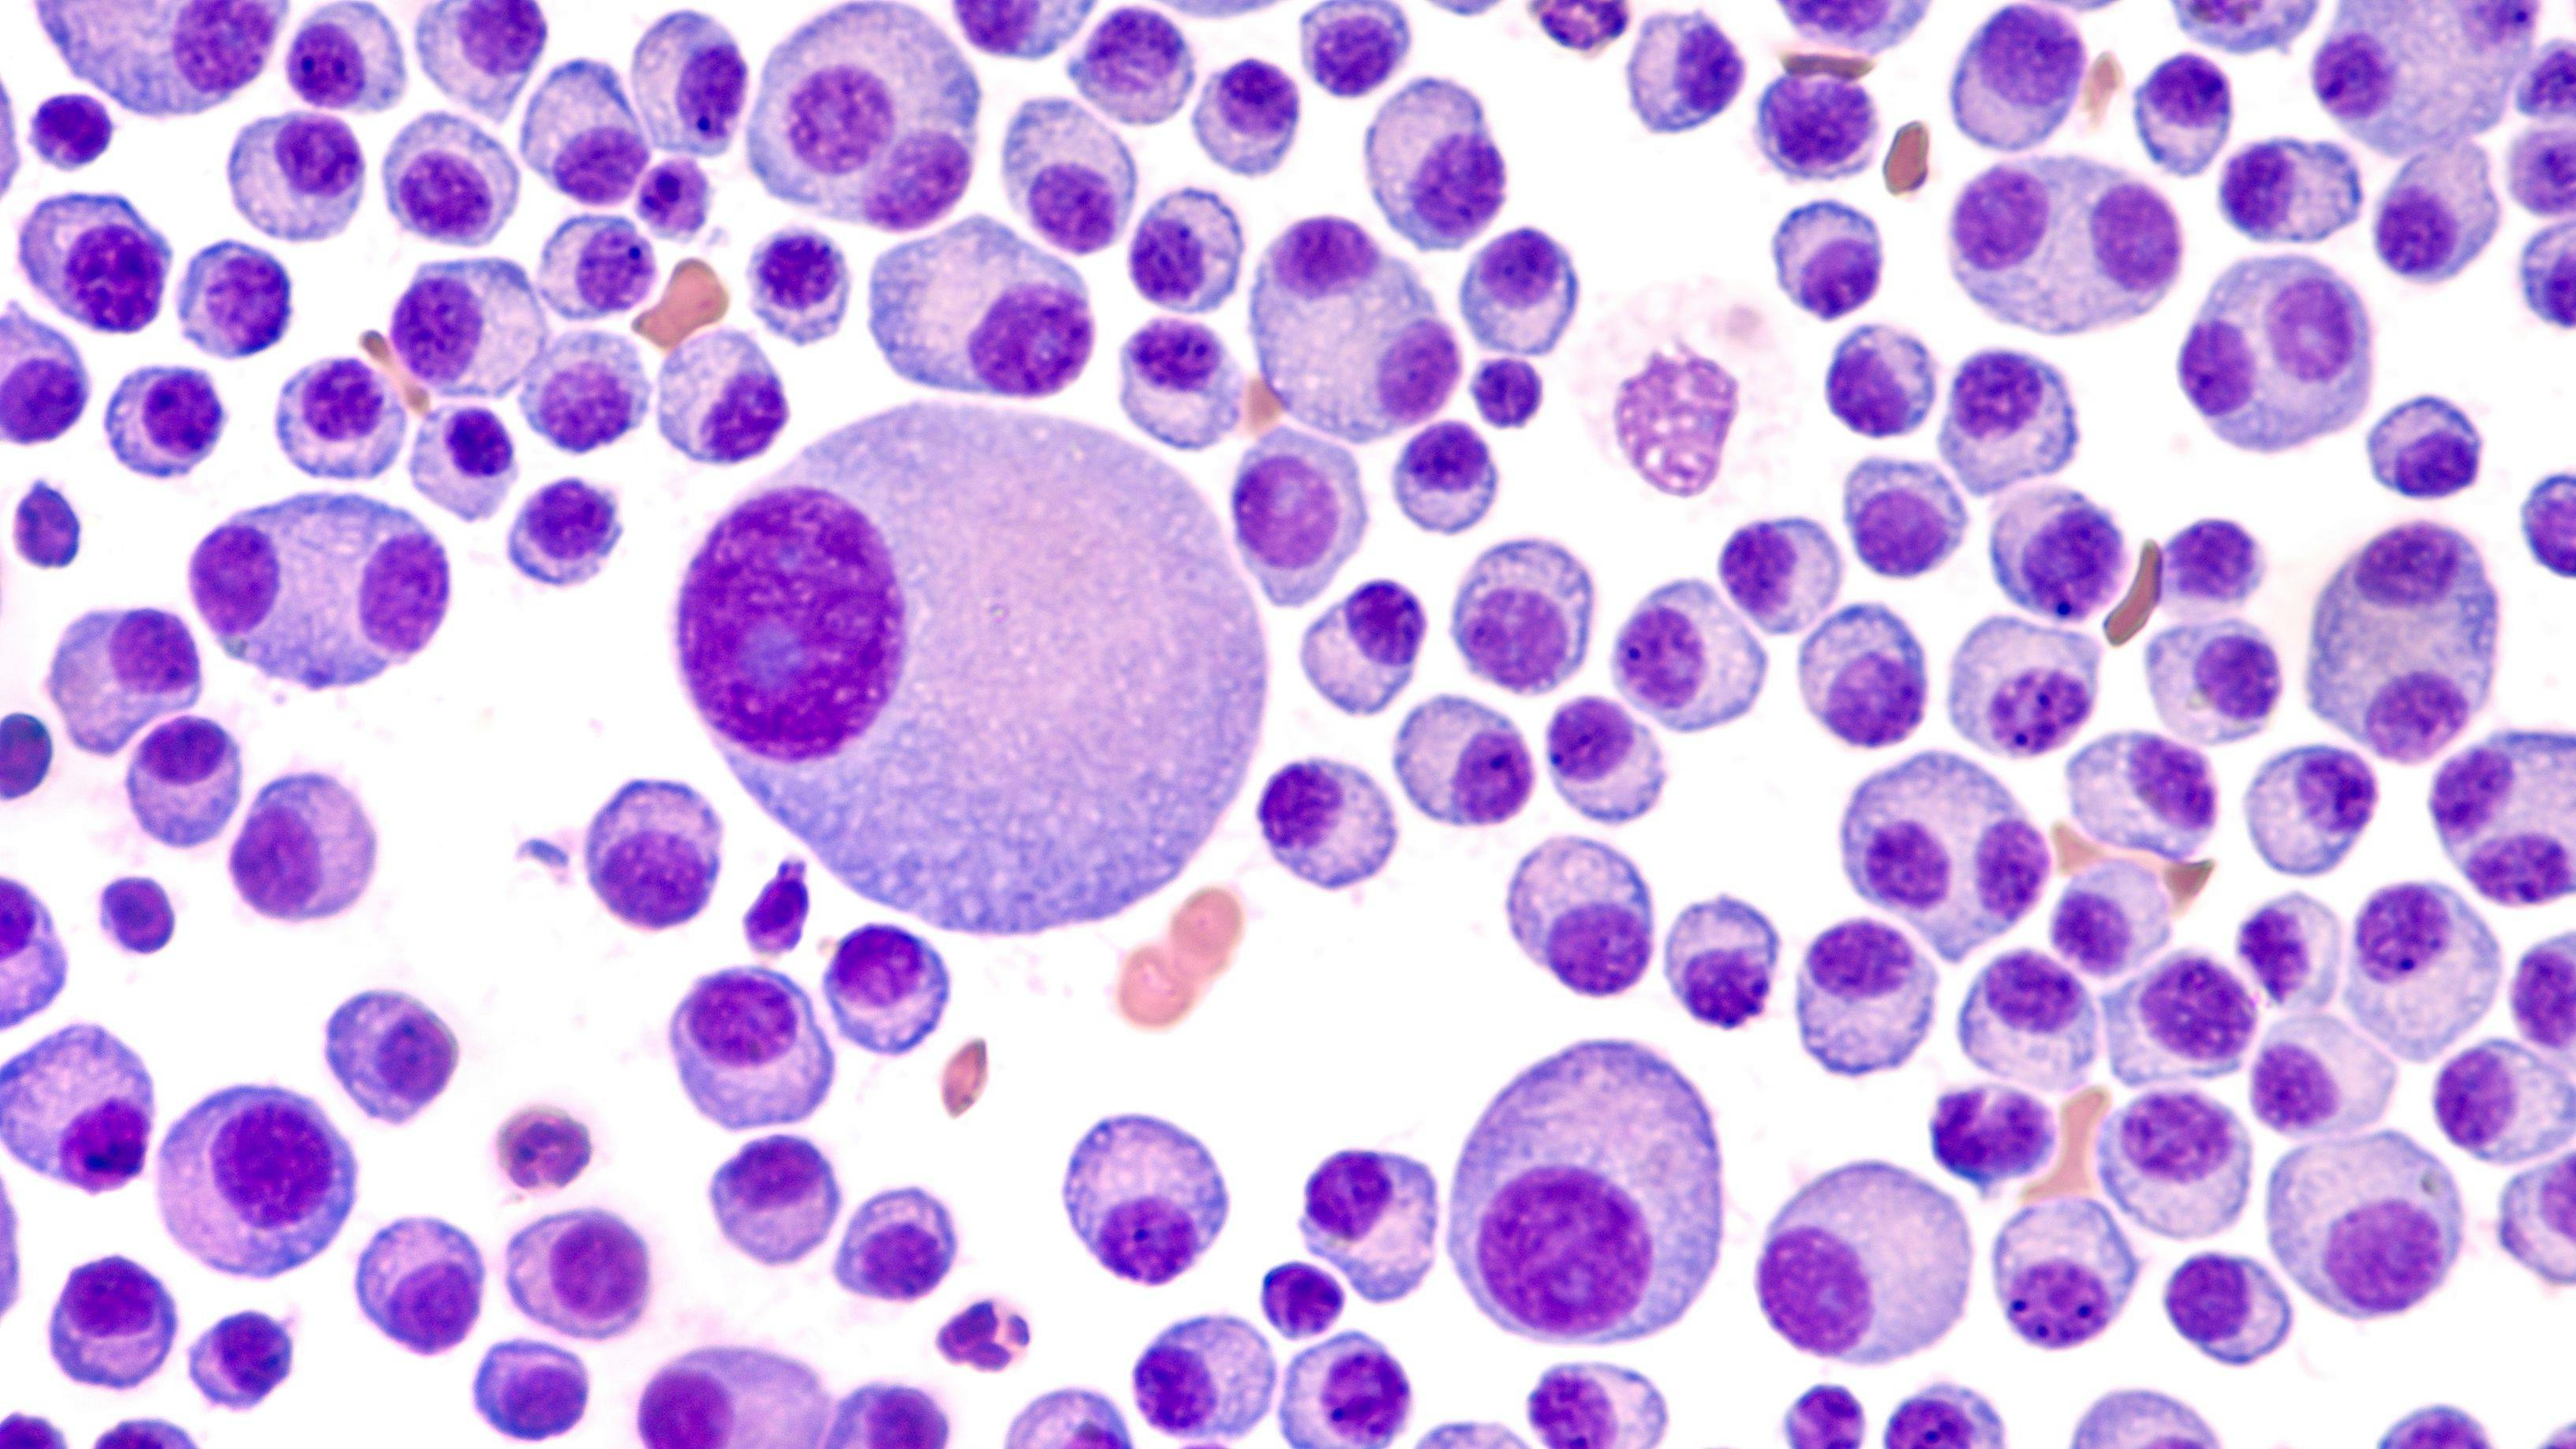 Prognostic Model Based on Tumor Immune Cell Infiltration Score May Predict Prognosis in Multiple Myeloma